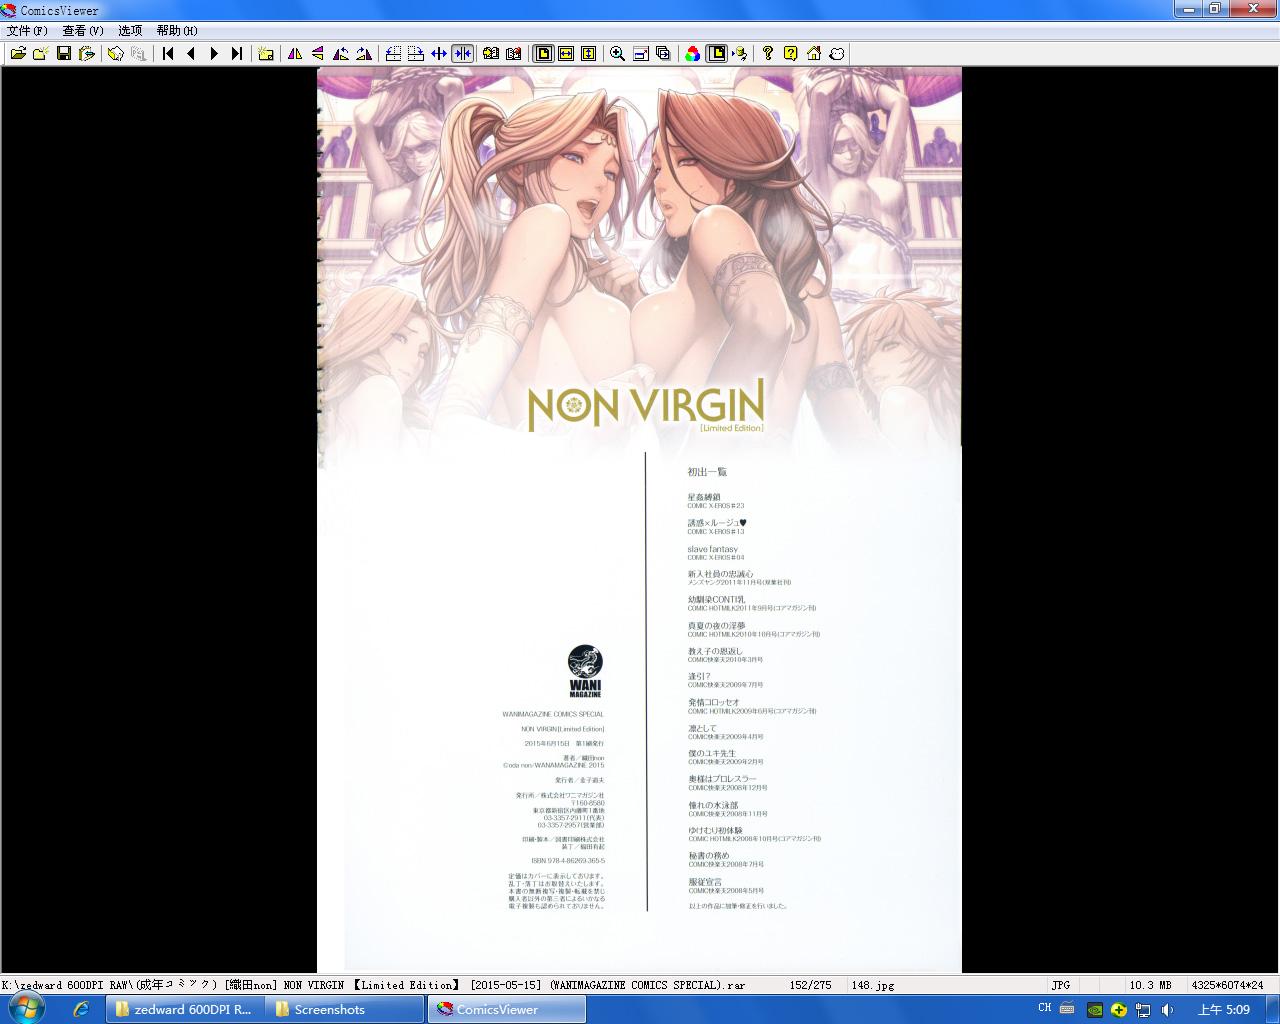 NON VIRGIN 【Limited Edition】 81